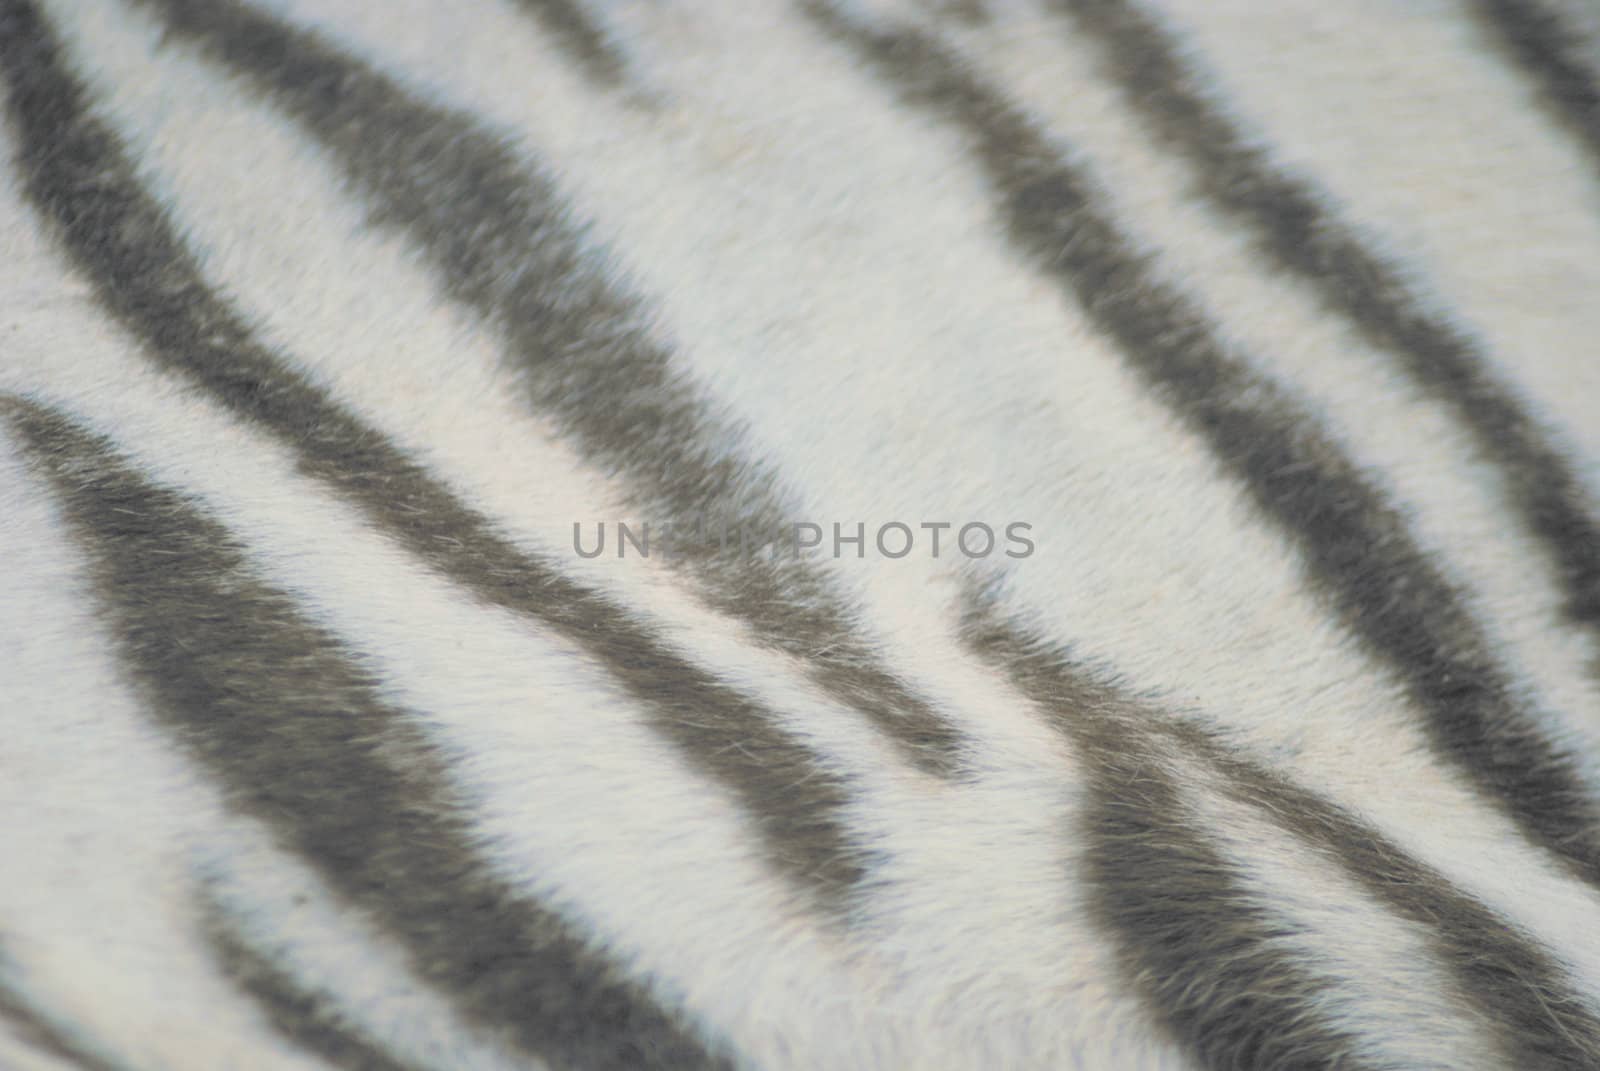 white tiger skin close up, natural texture  